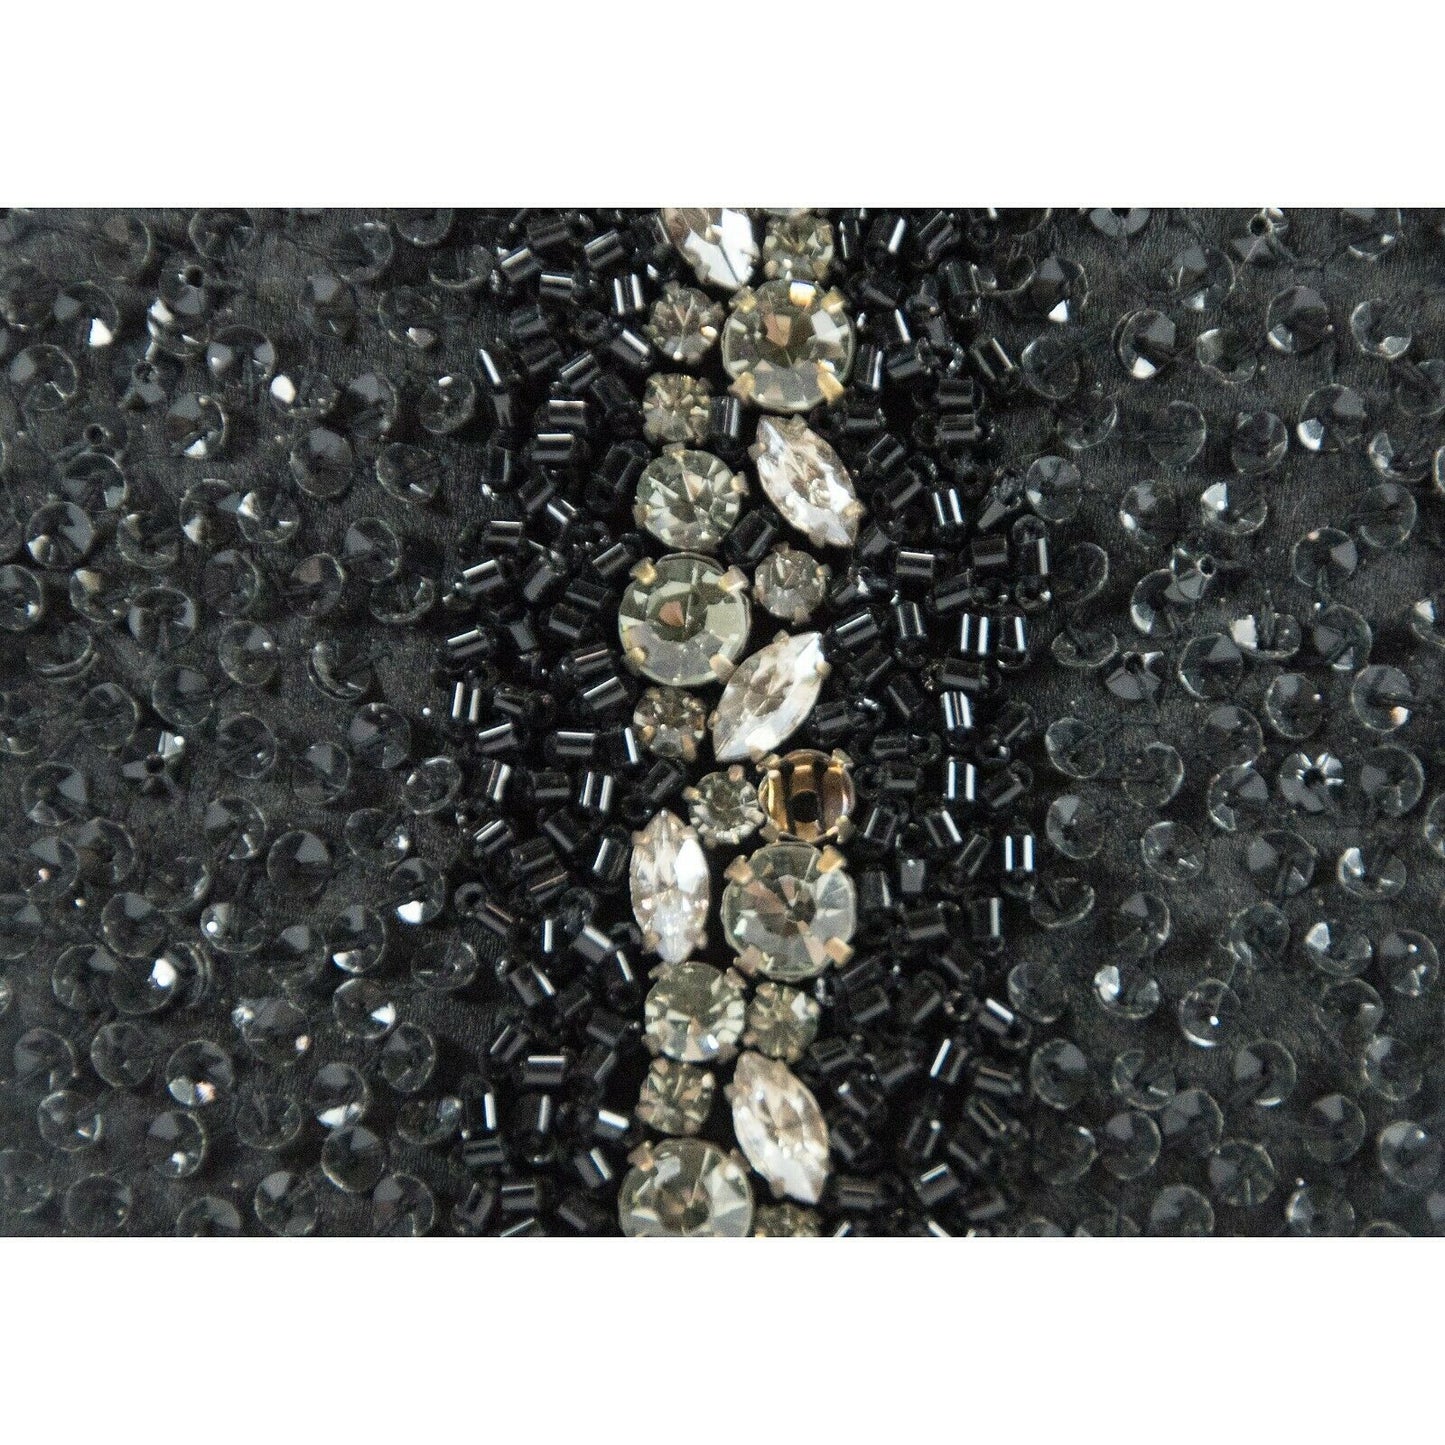 Salvatore Ferragamo Kameron Black Silver Framed Beaded Jewel Clutch Bag $2590